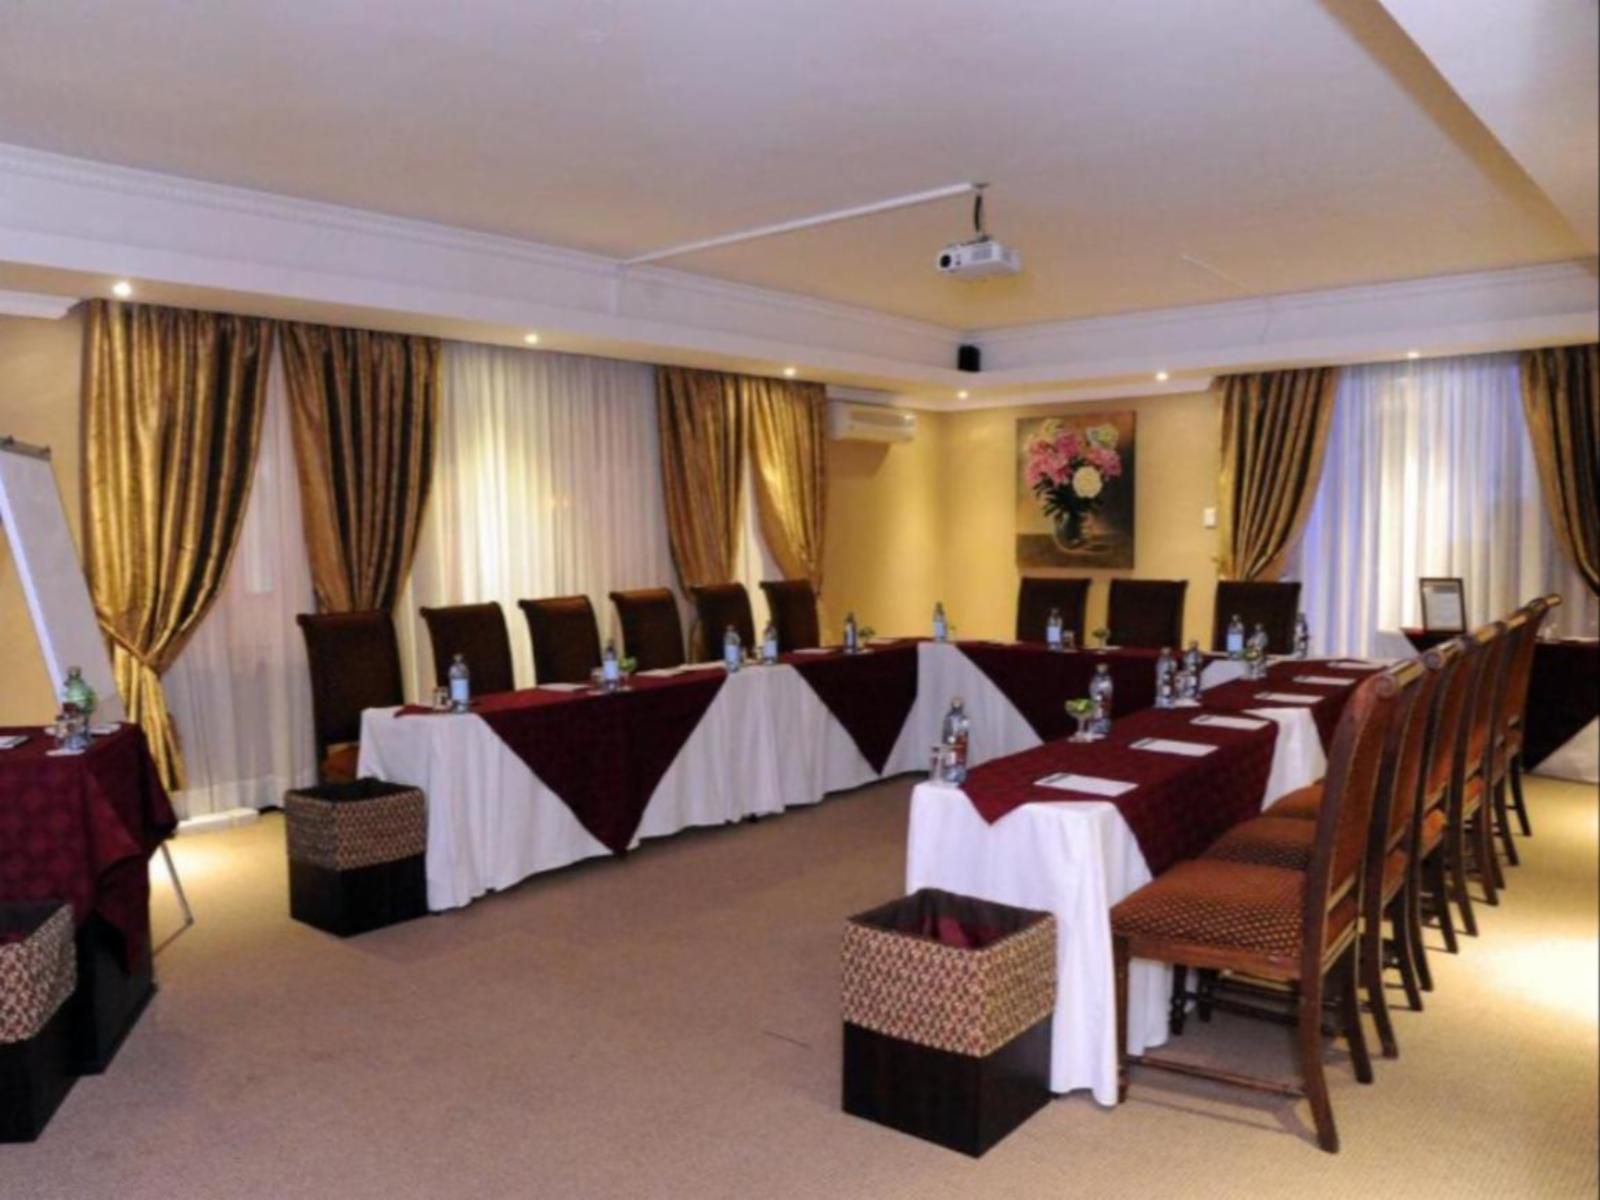 Anta Boga Hotel Brandwag Bloemfontein Free State South Africa Seminar Room